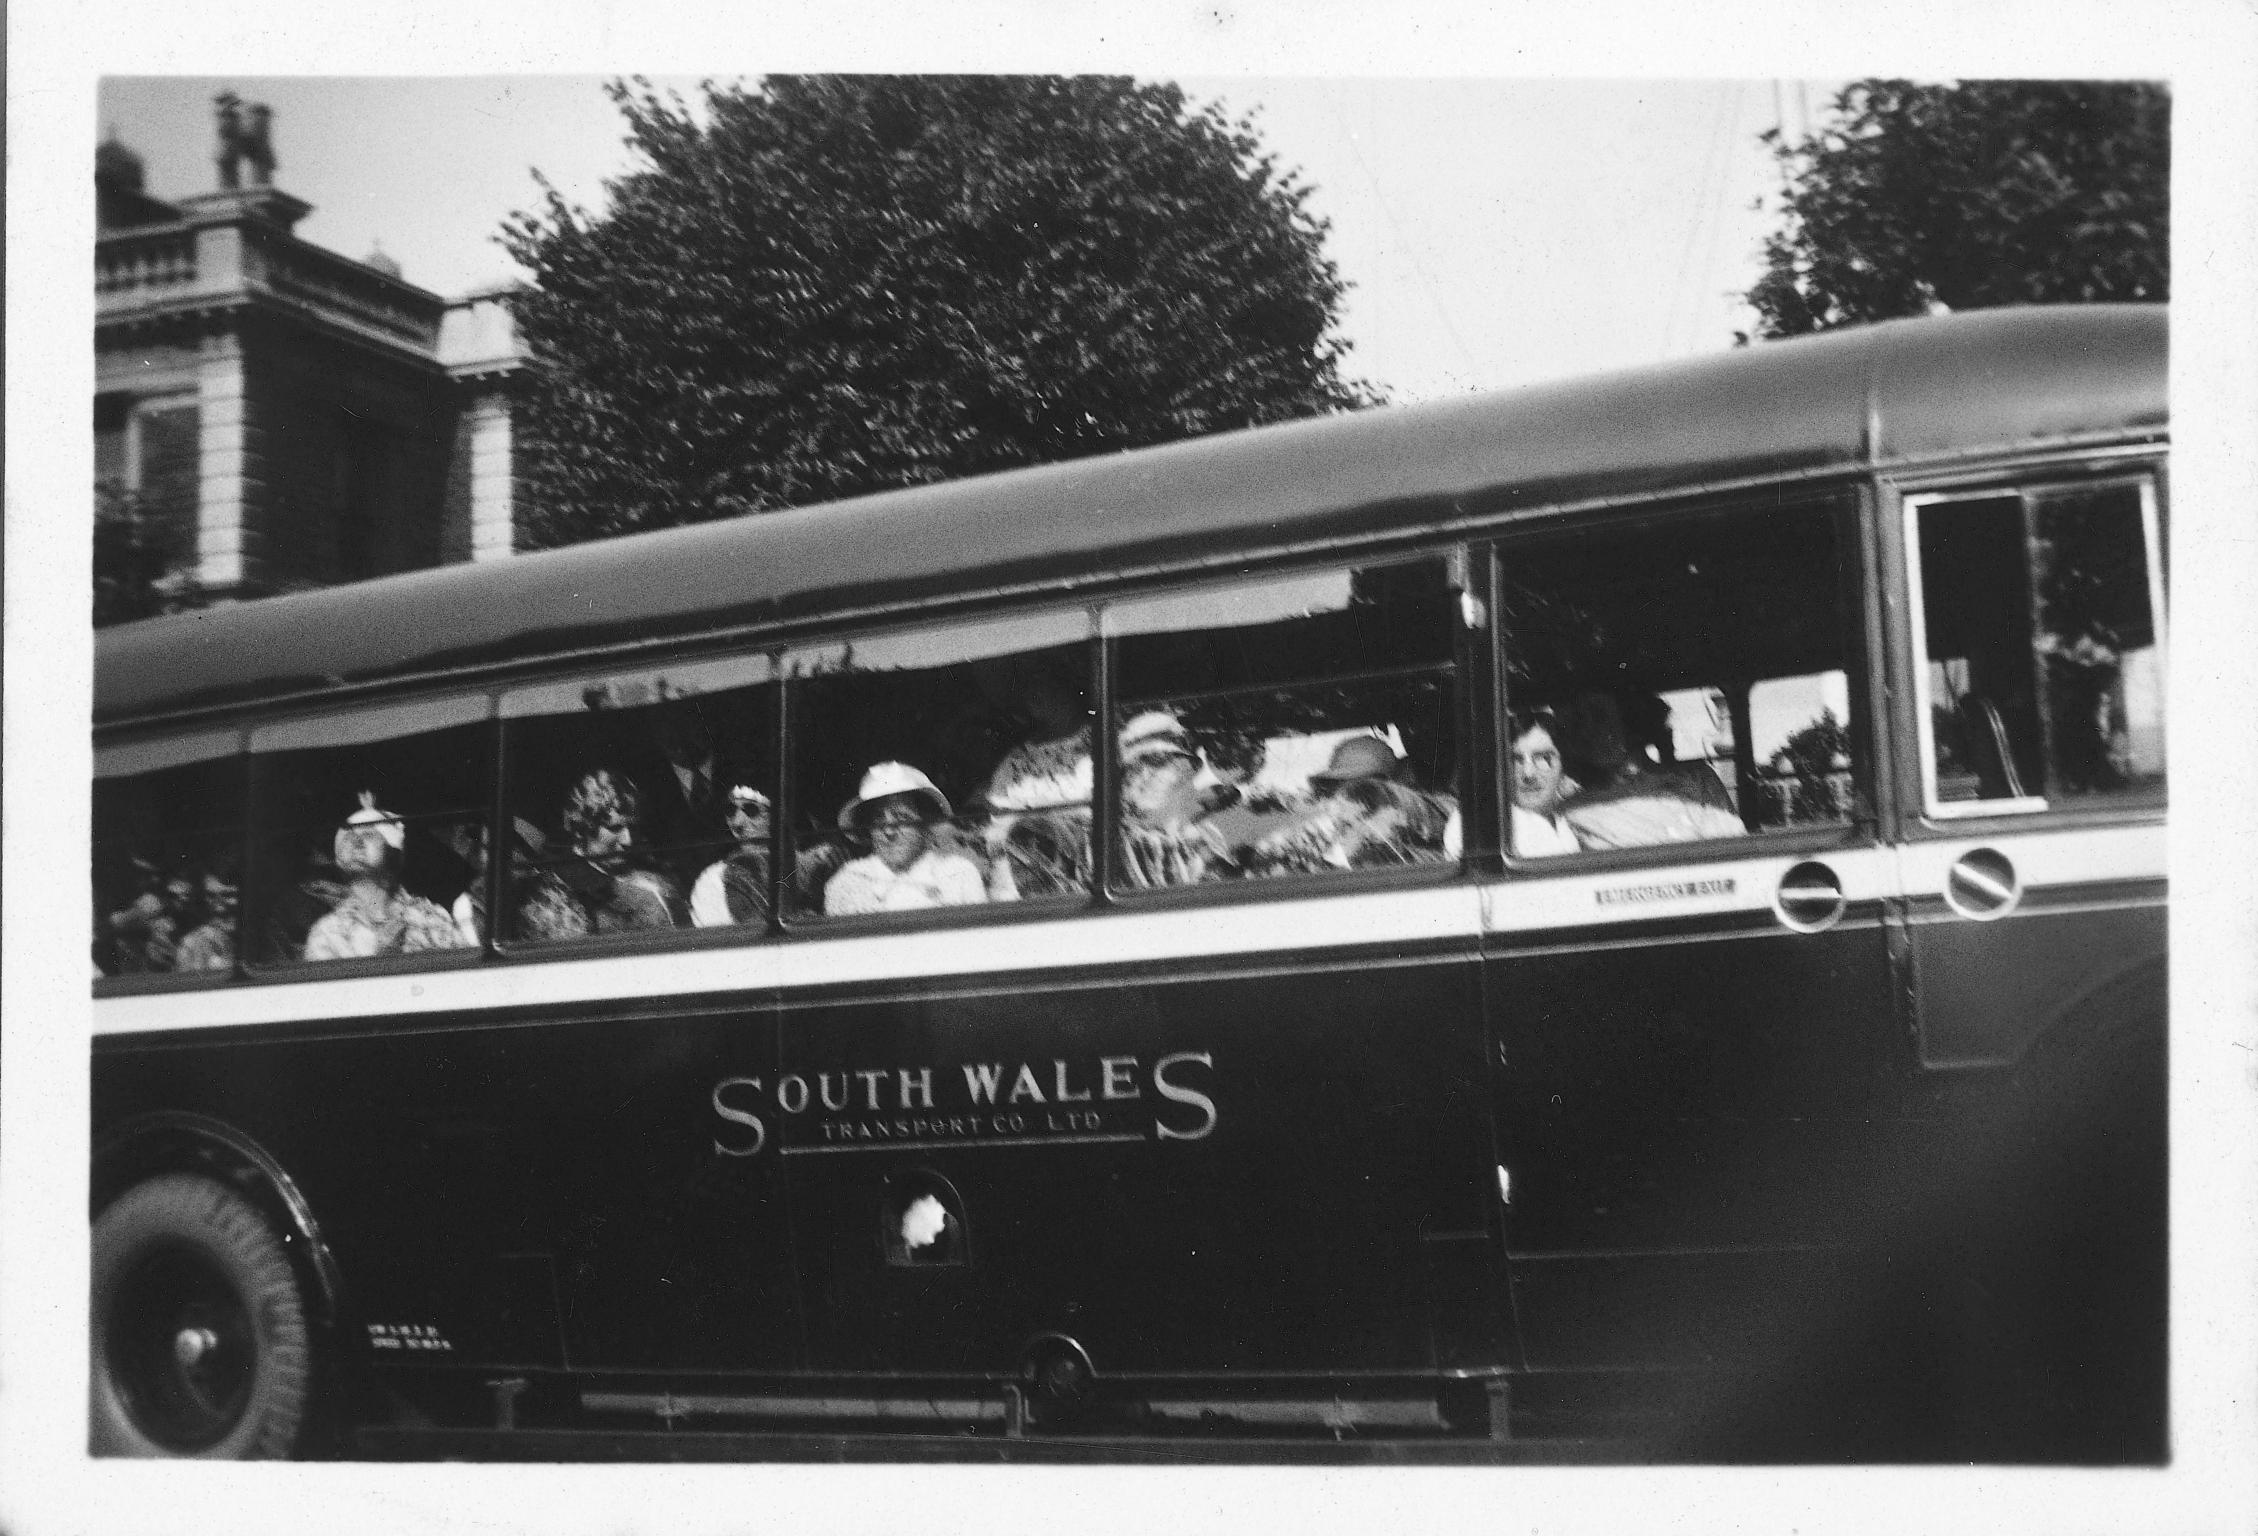 South Wales Transport Co. Ltd. coach, photo.